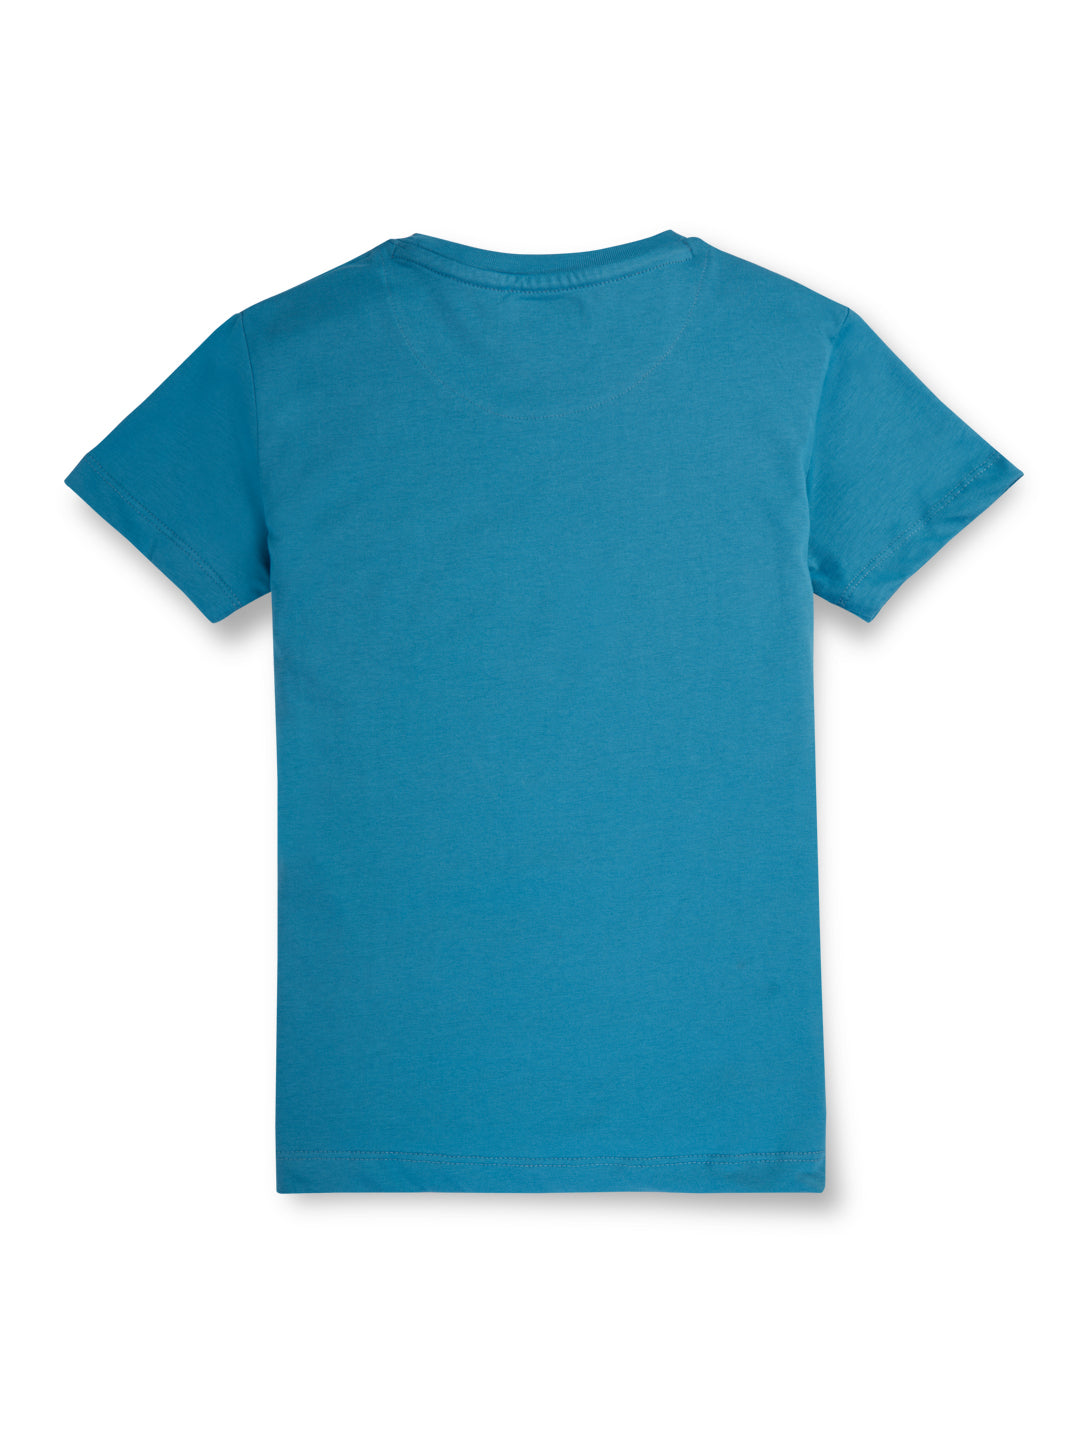 Boys Blue Racer Cotton Round Neck Half Sleeve T-Shirt